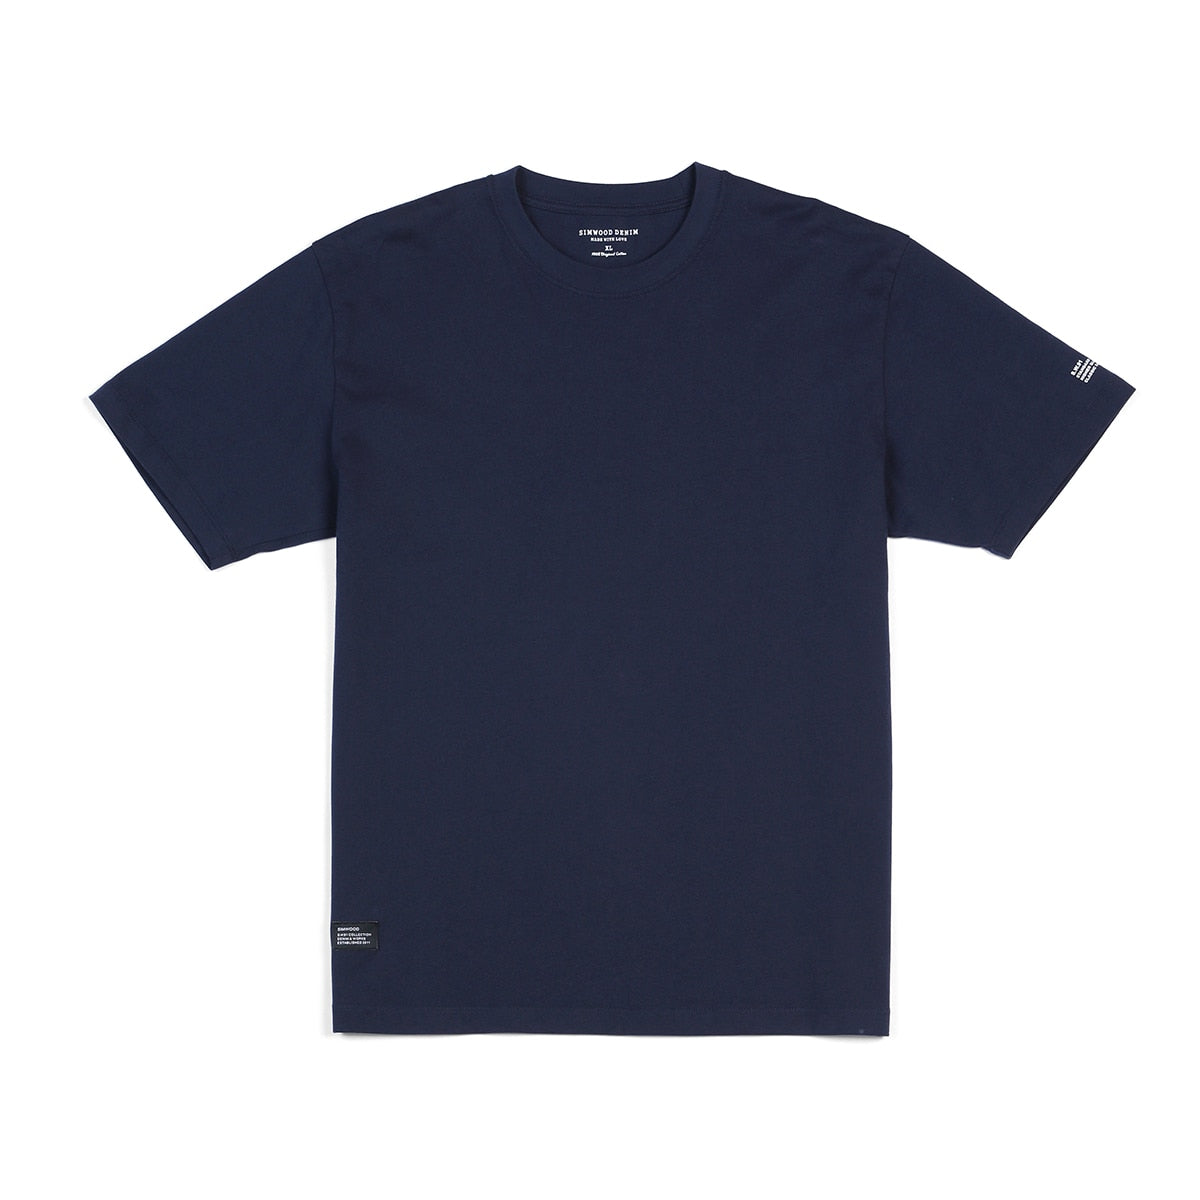 Camiseta de tela de algodón 100% de 250g para hombre, camisetas holgadas de manga larga de Color sólido de alta calidad, camisetas de gran tamaño